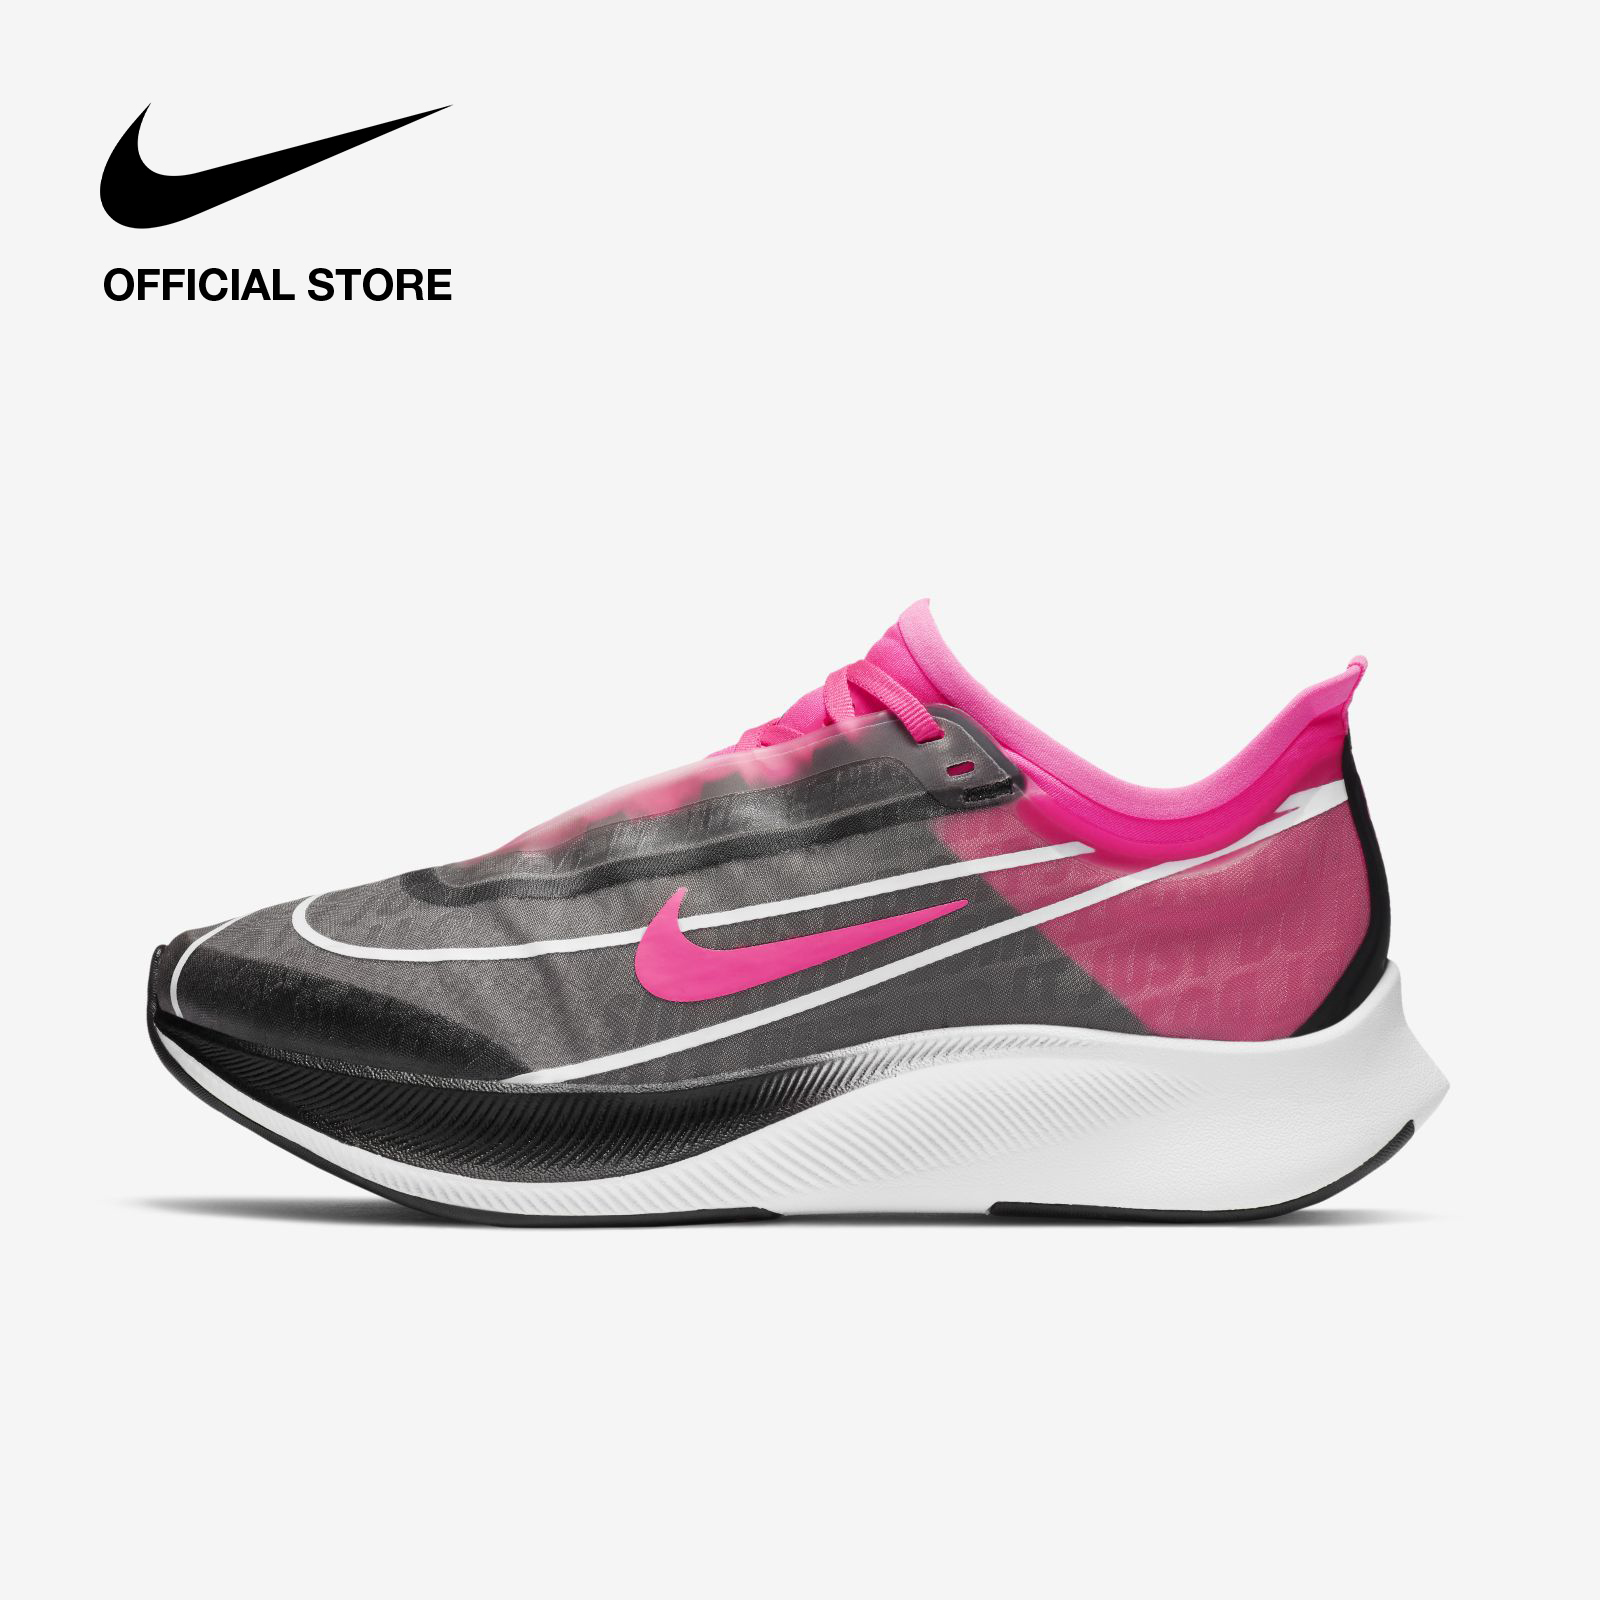 Nike Women's Zoom Fly 3 Running Shoes - Black ไนกี้ รองเท้าวิ่งผู้หญิง ซูม ฟลาย 3 - สีดำ